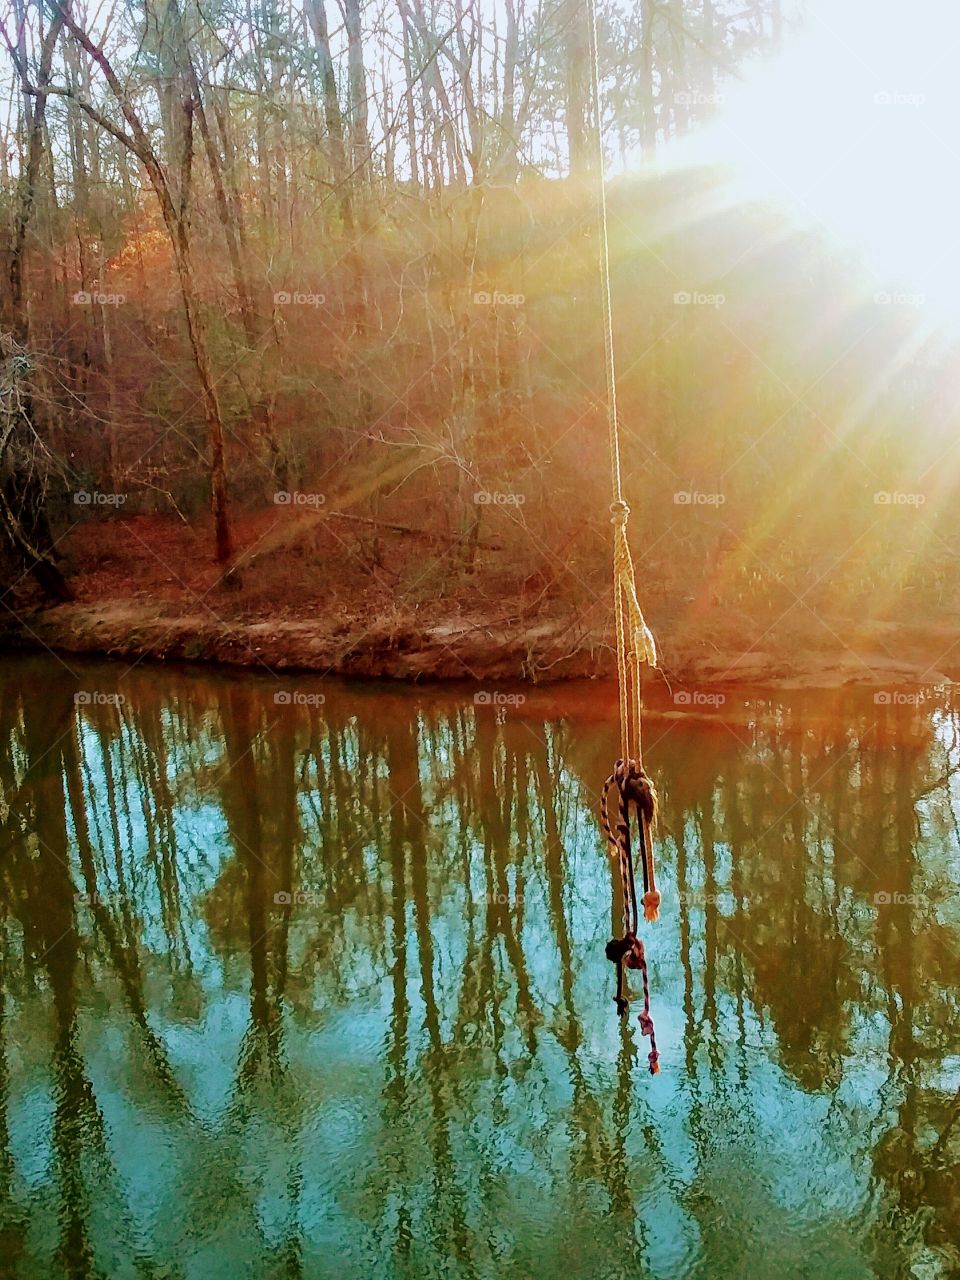 Athens, GA River